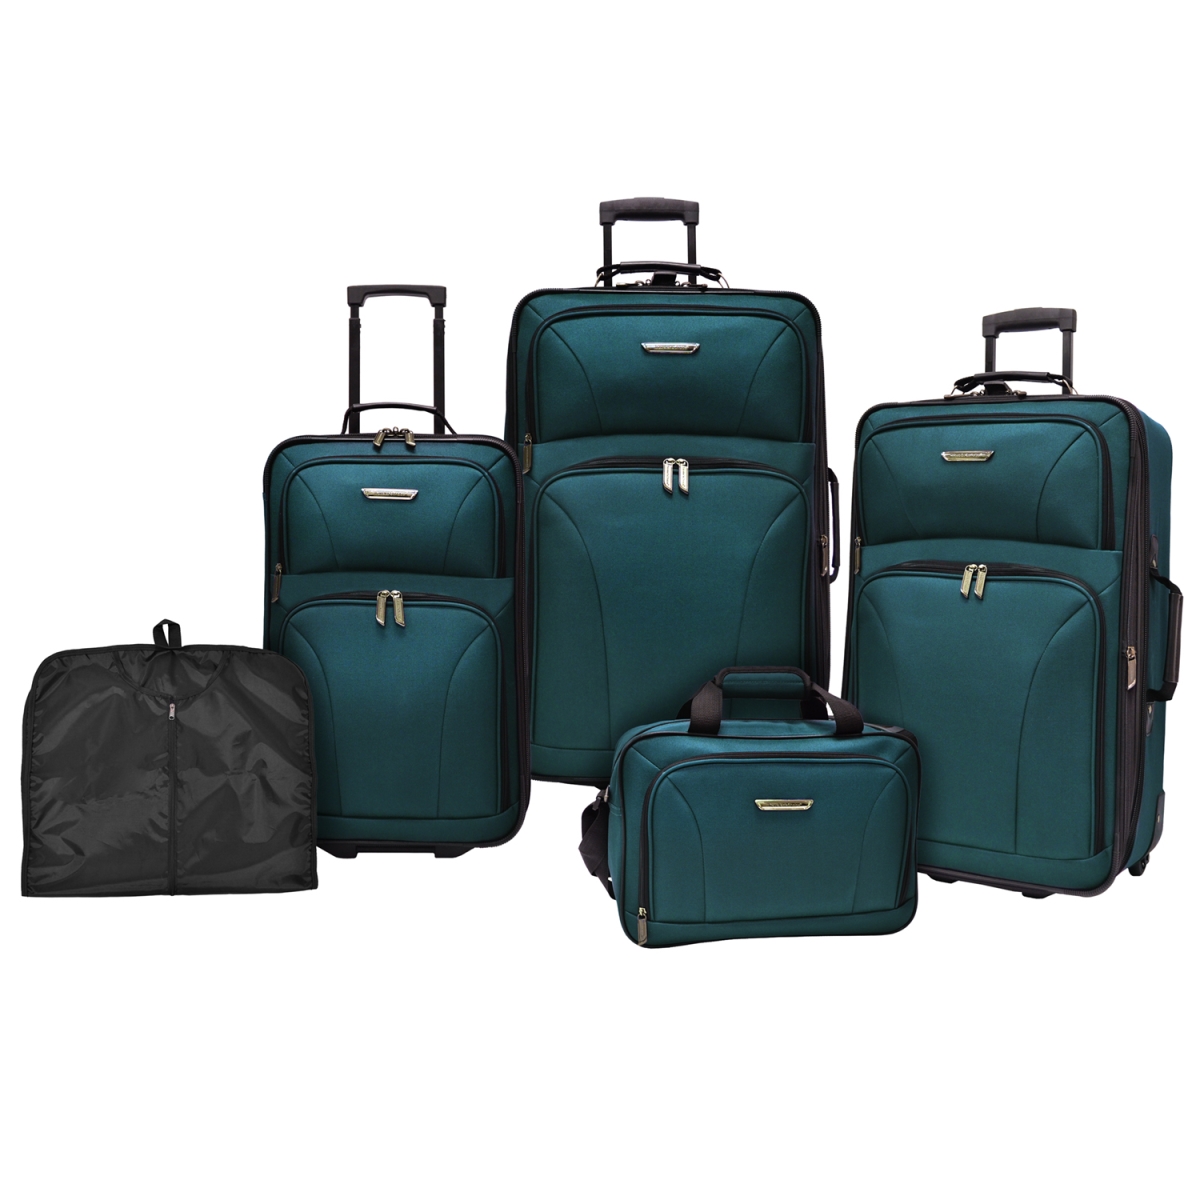 Travelers Choice Tc0835tel Versatile 5 Piece Luggage Set, Teal